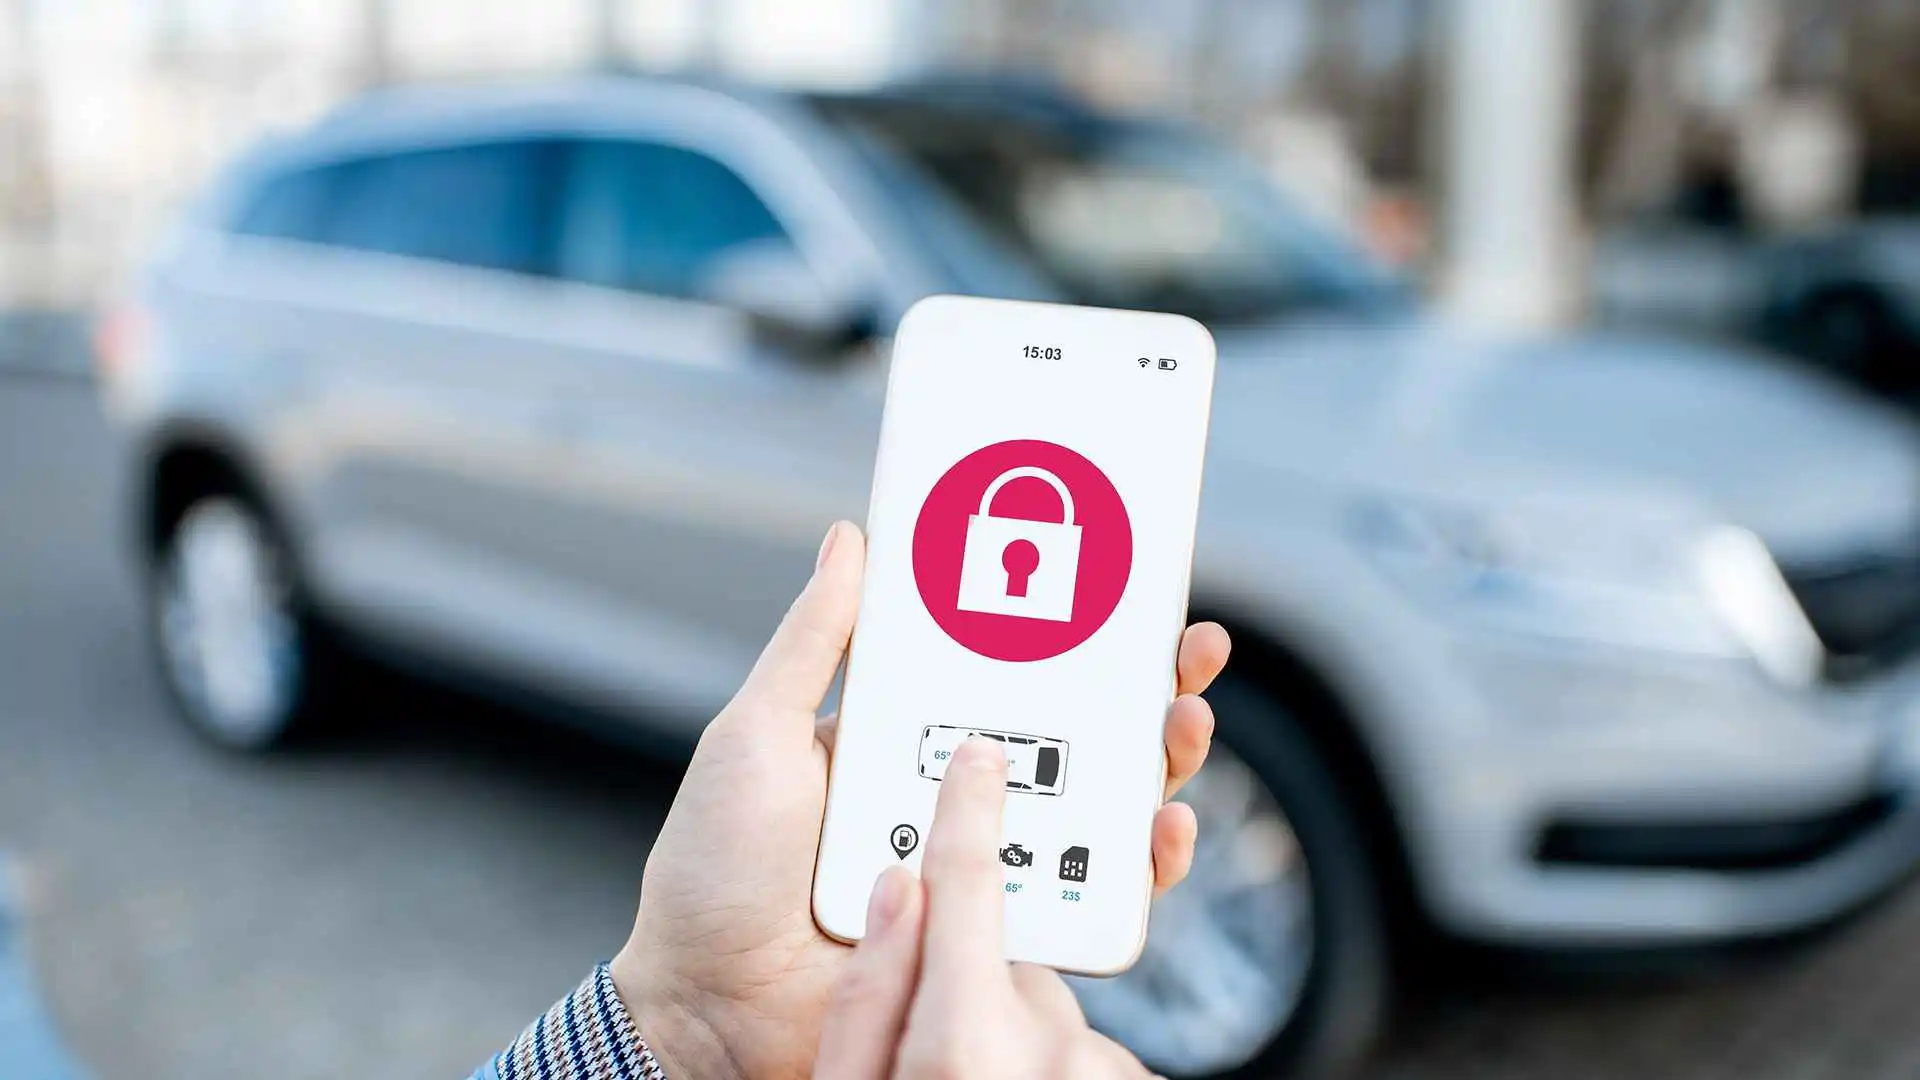 locking vehicle from app on phone